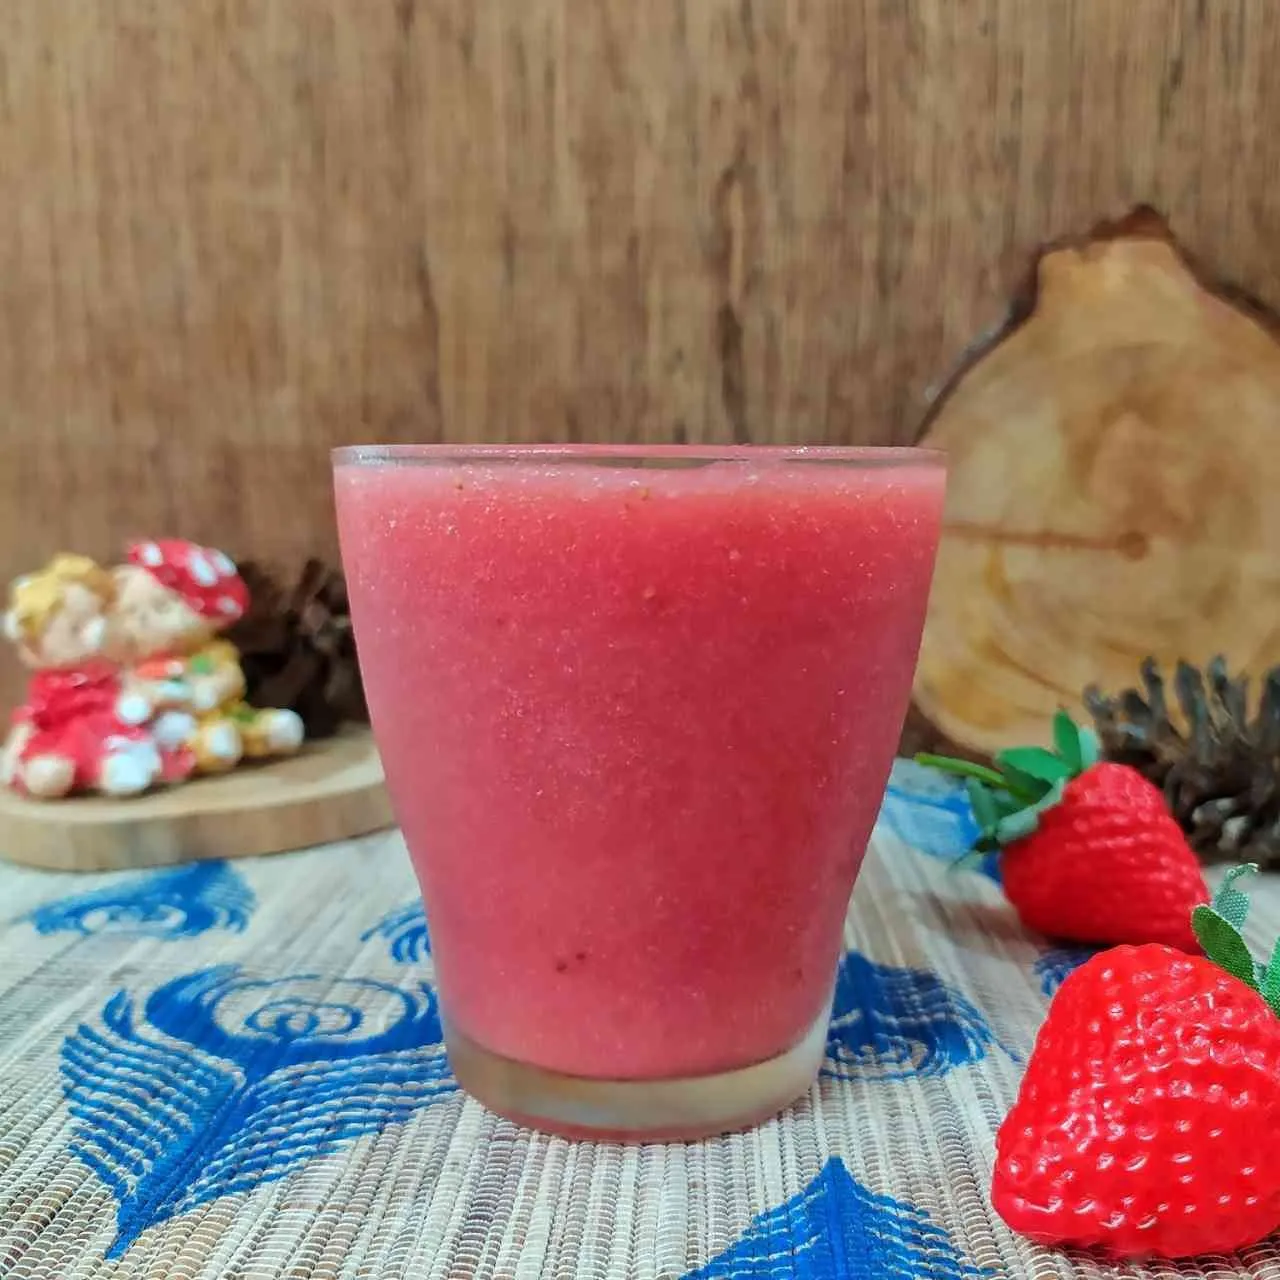 Guava Strawberry Juice